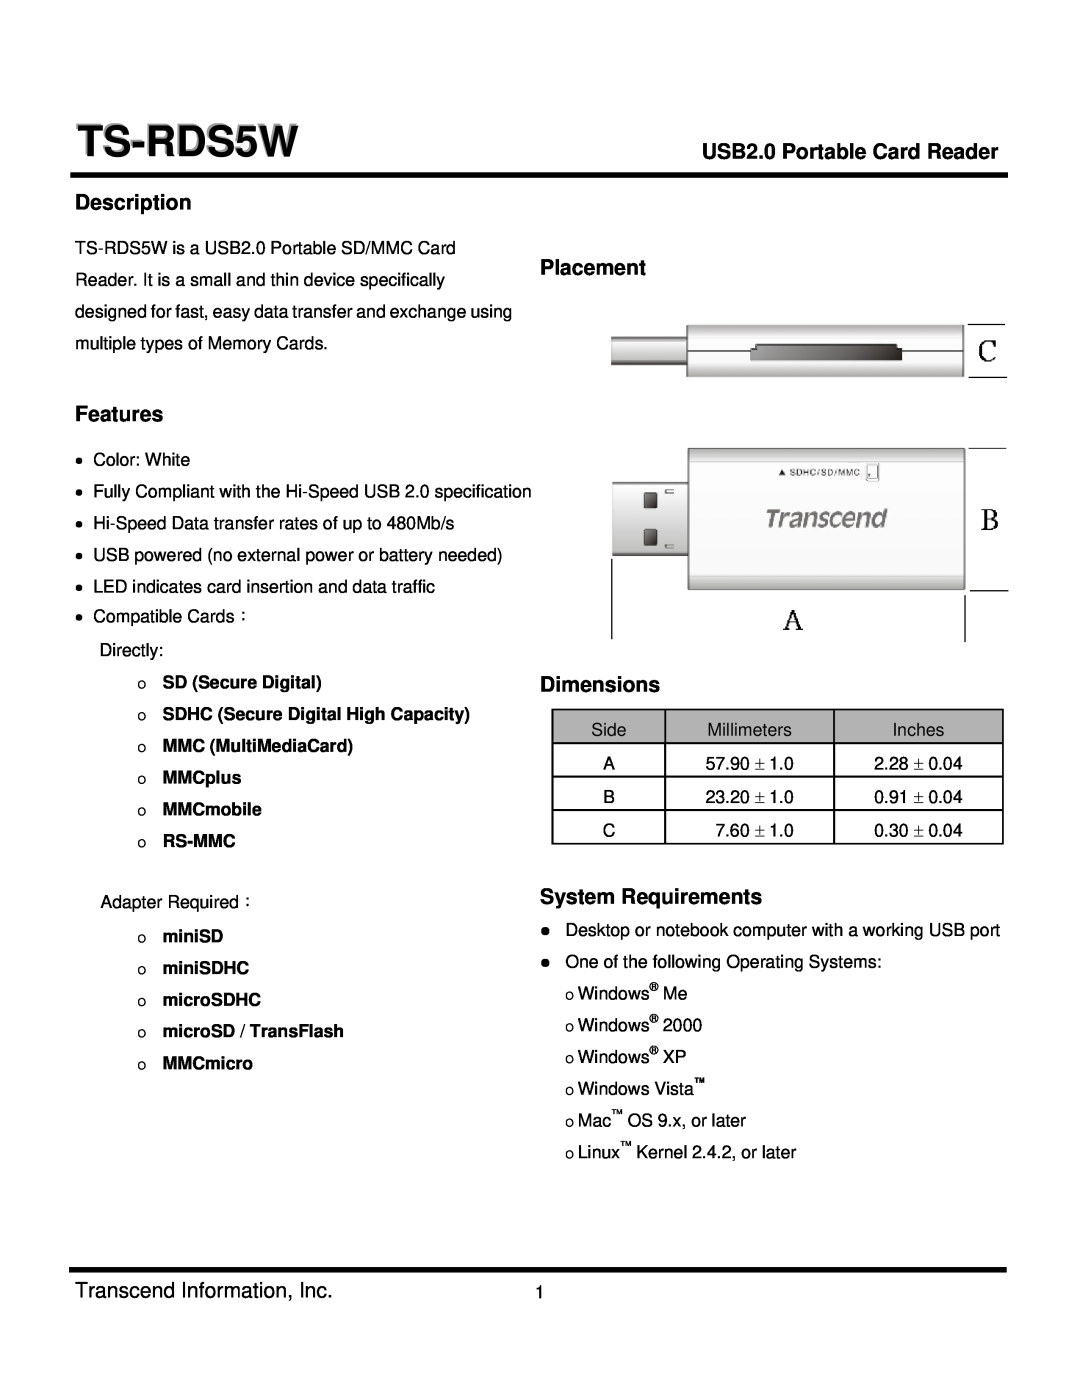 Transcend Information TS-RDS5W dimensions USB2.0 Portable Card Reader, Description, Placement, Features, Dimensions 